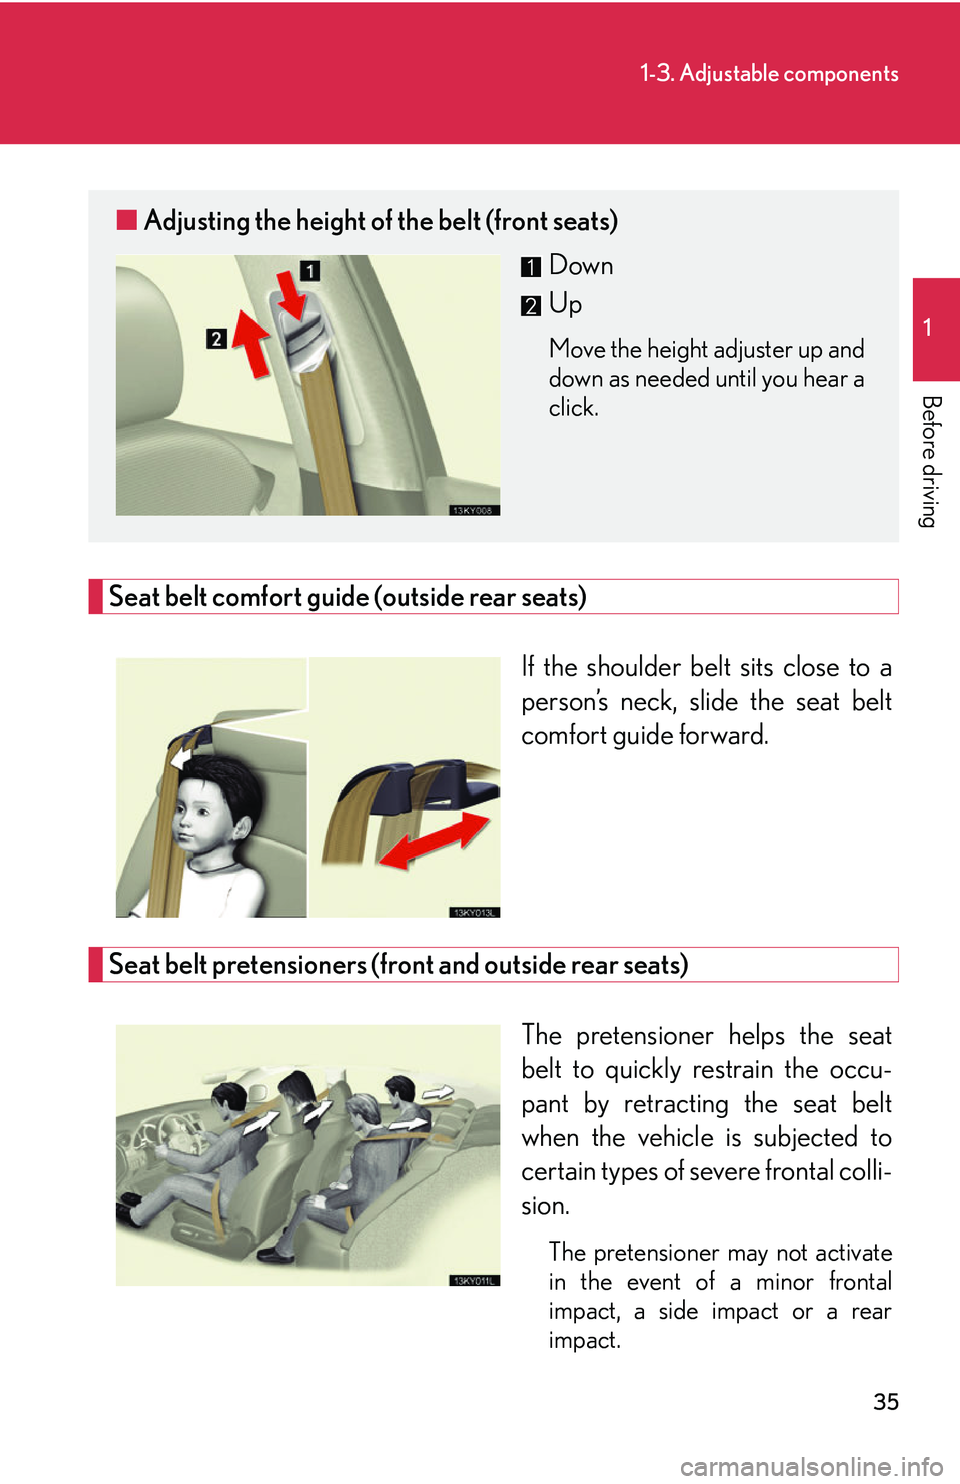 Lexus IS250 2006  Lexus Parking Assist-sensor / LEXUS 2006 IS350/250 FROM MAY 2006 PROD. OWNERS MANUAL (OM53619U) 35
1-3. Adjustable components
1
Before driving
Seat belt comfort guide (outside rear seats)If the shoulder belt sits close to a
person’s neck, slide the seat belt
comfort guide forward.
Seat belt pr